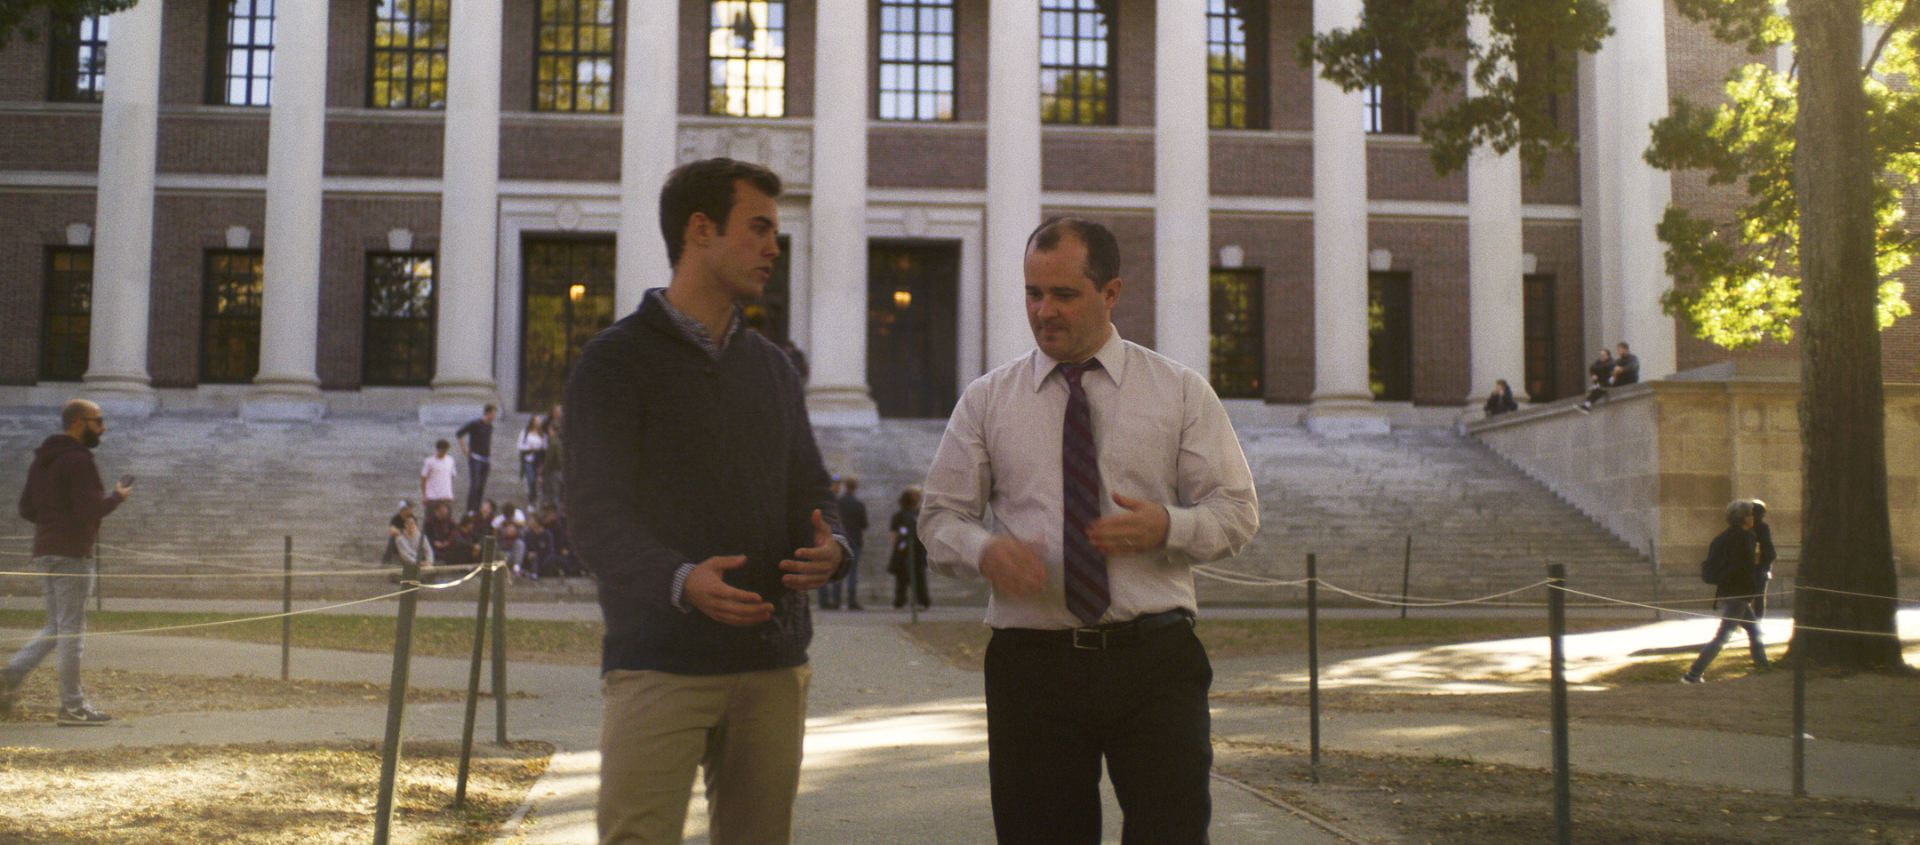 Professor Dustin Tingley and student talking and walking in Harvard yard